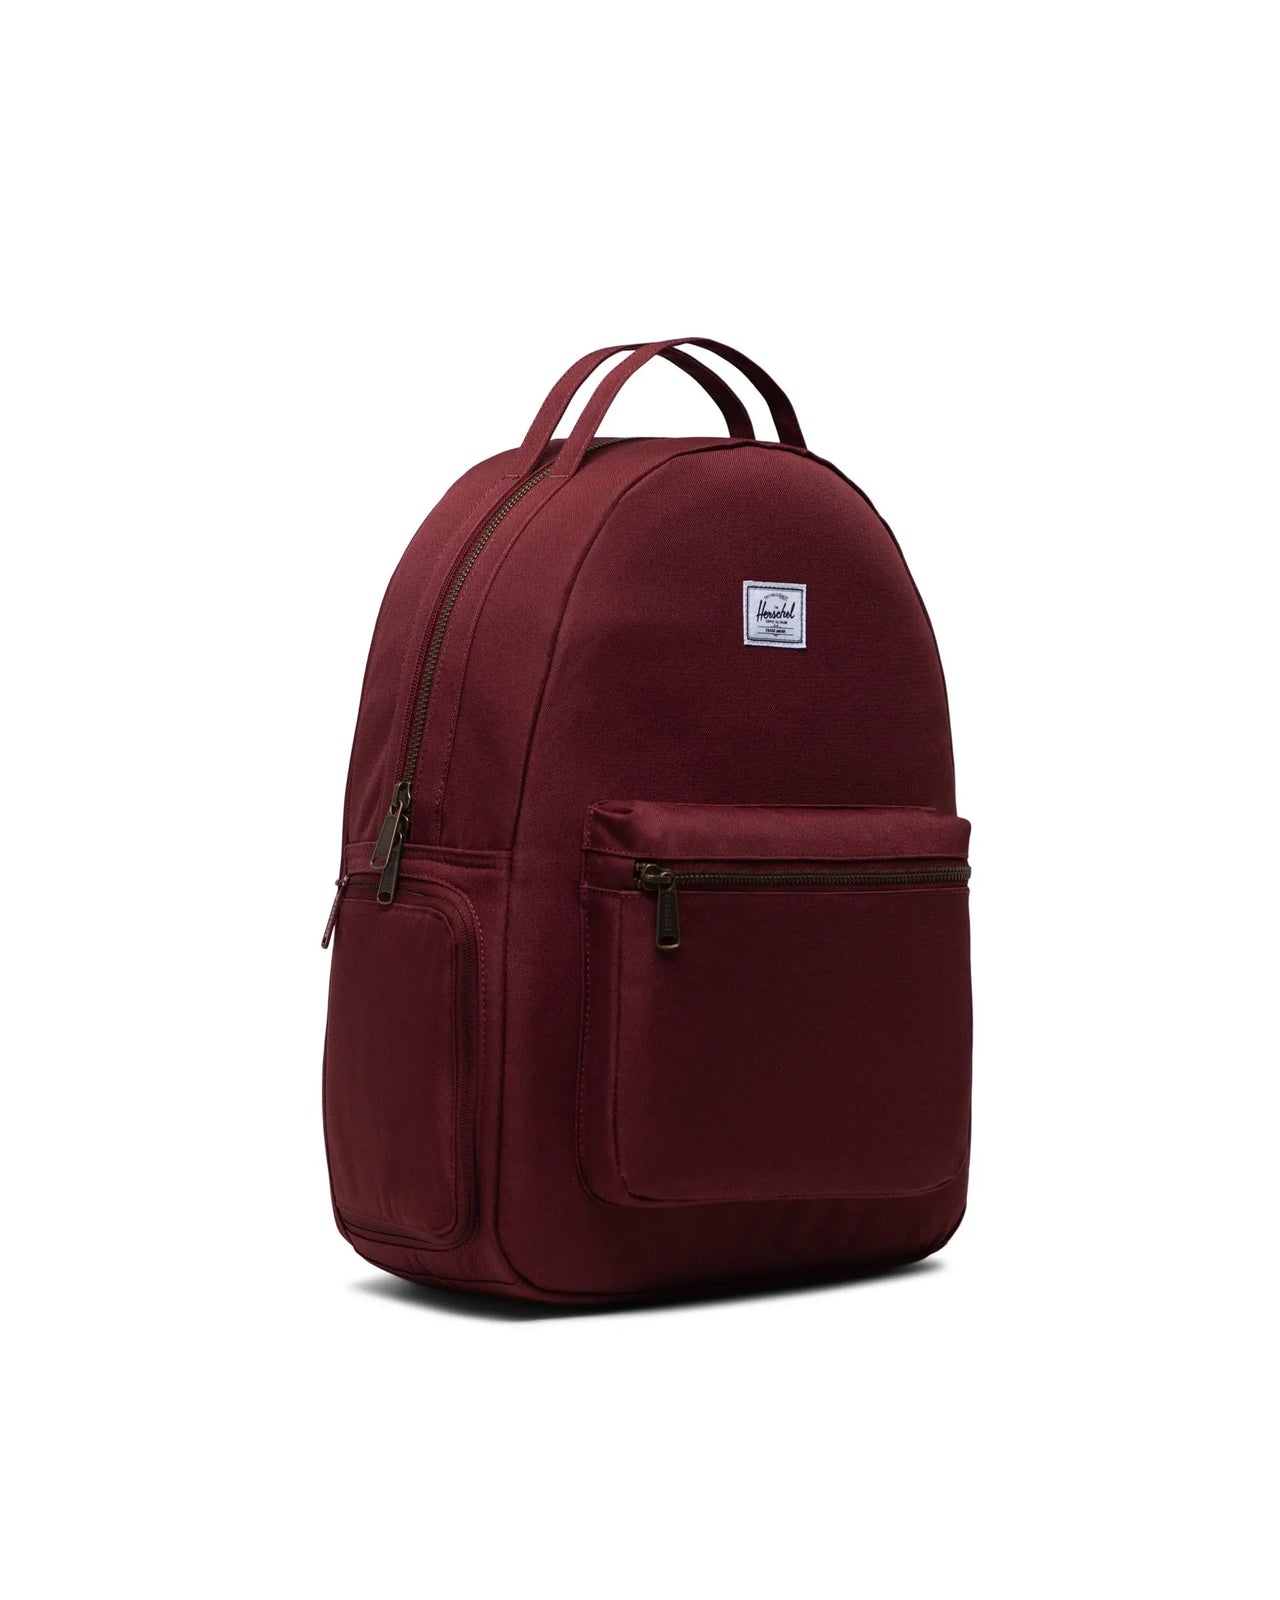 Nova Backpack Diaper Bag